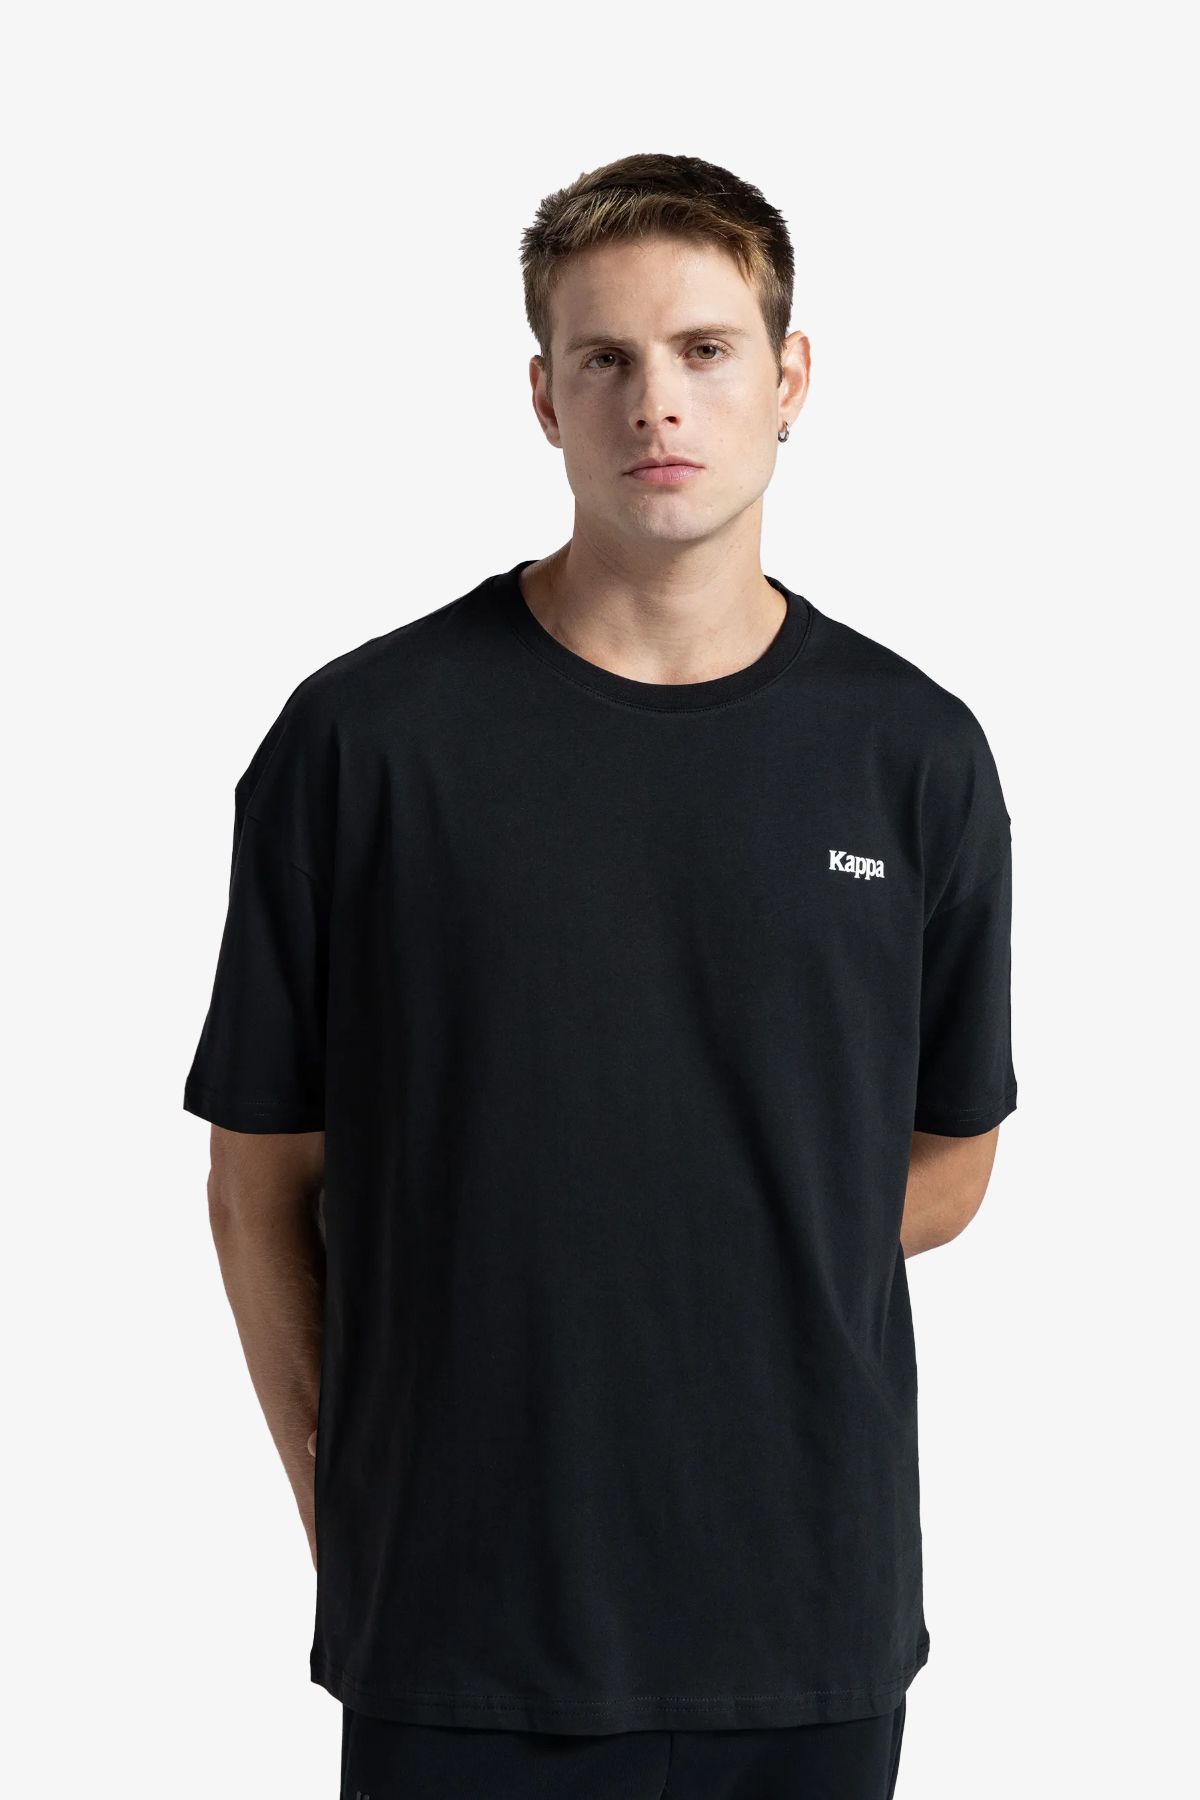 Kappa Authentic Narita Erkek Siyah T-Shirt 321P4FW-005